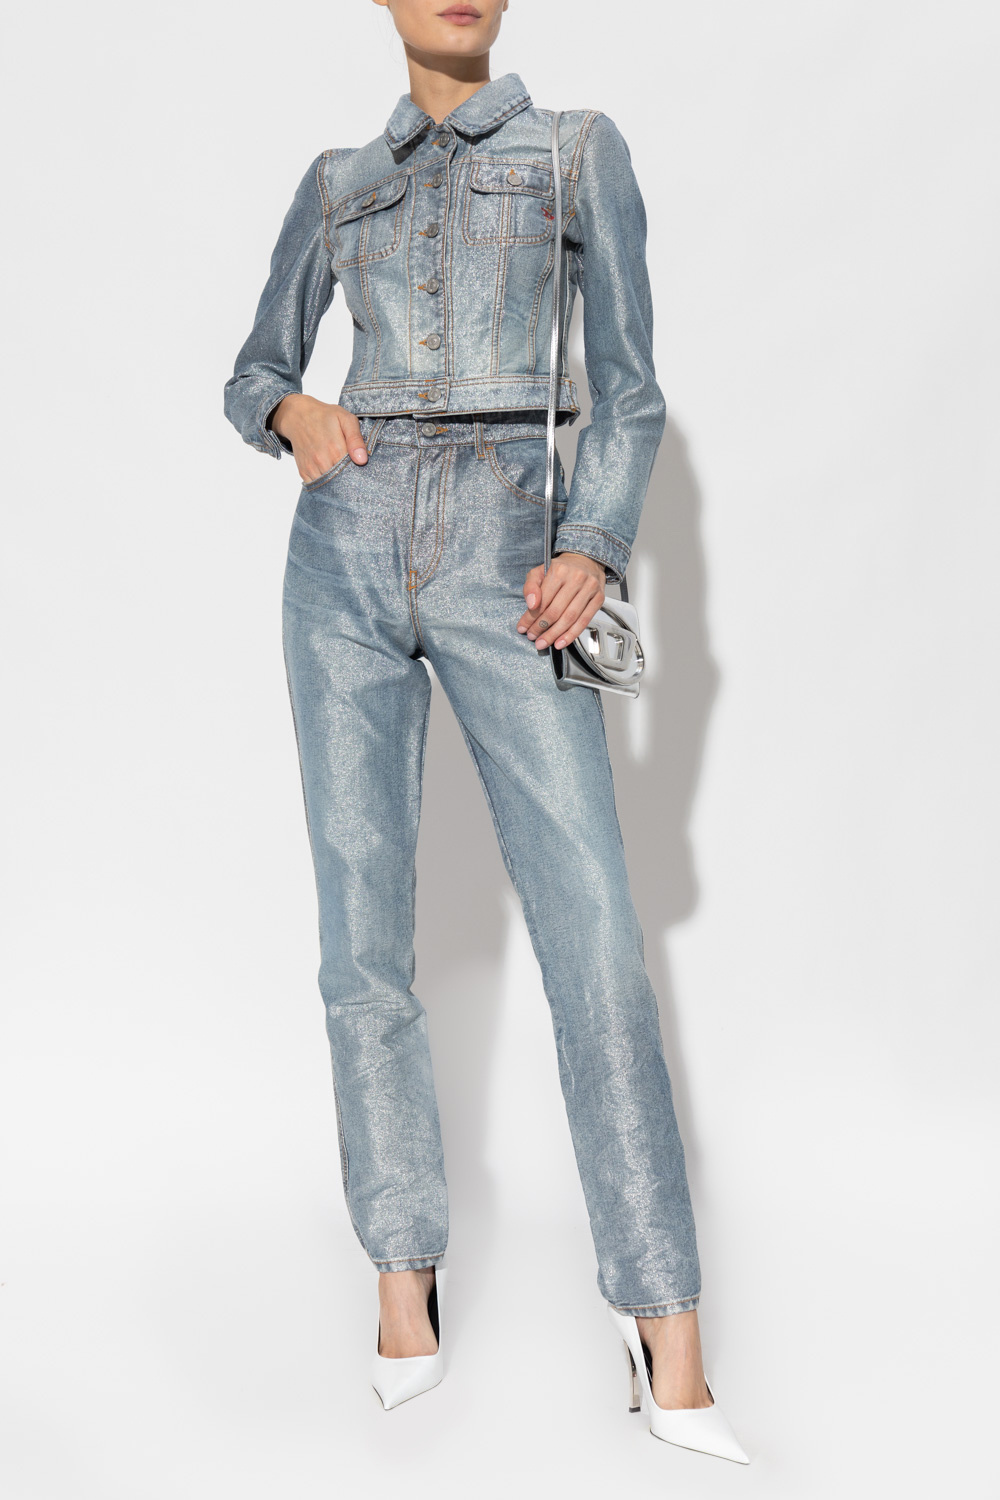 fast | | Clothing Diesel nik fit epic jeans IetpShops dri Women\'s \'1994 shorts | L.32\'